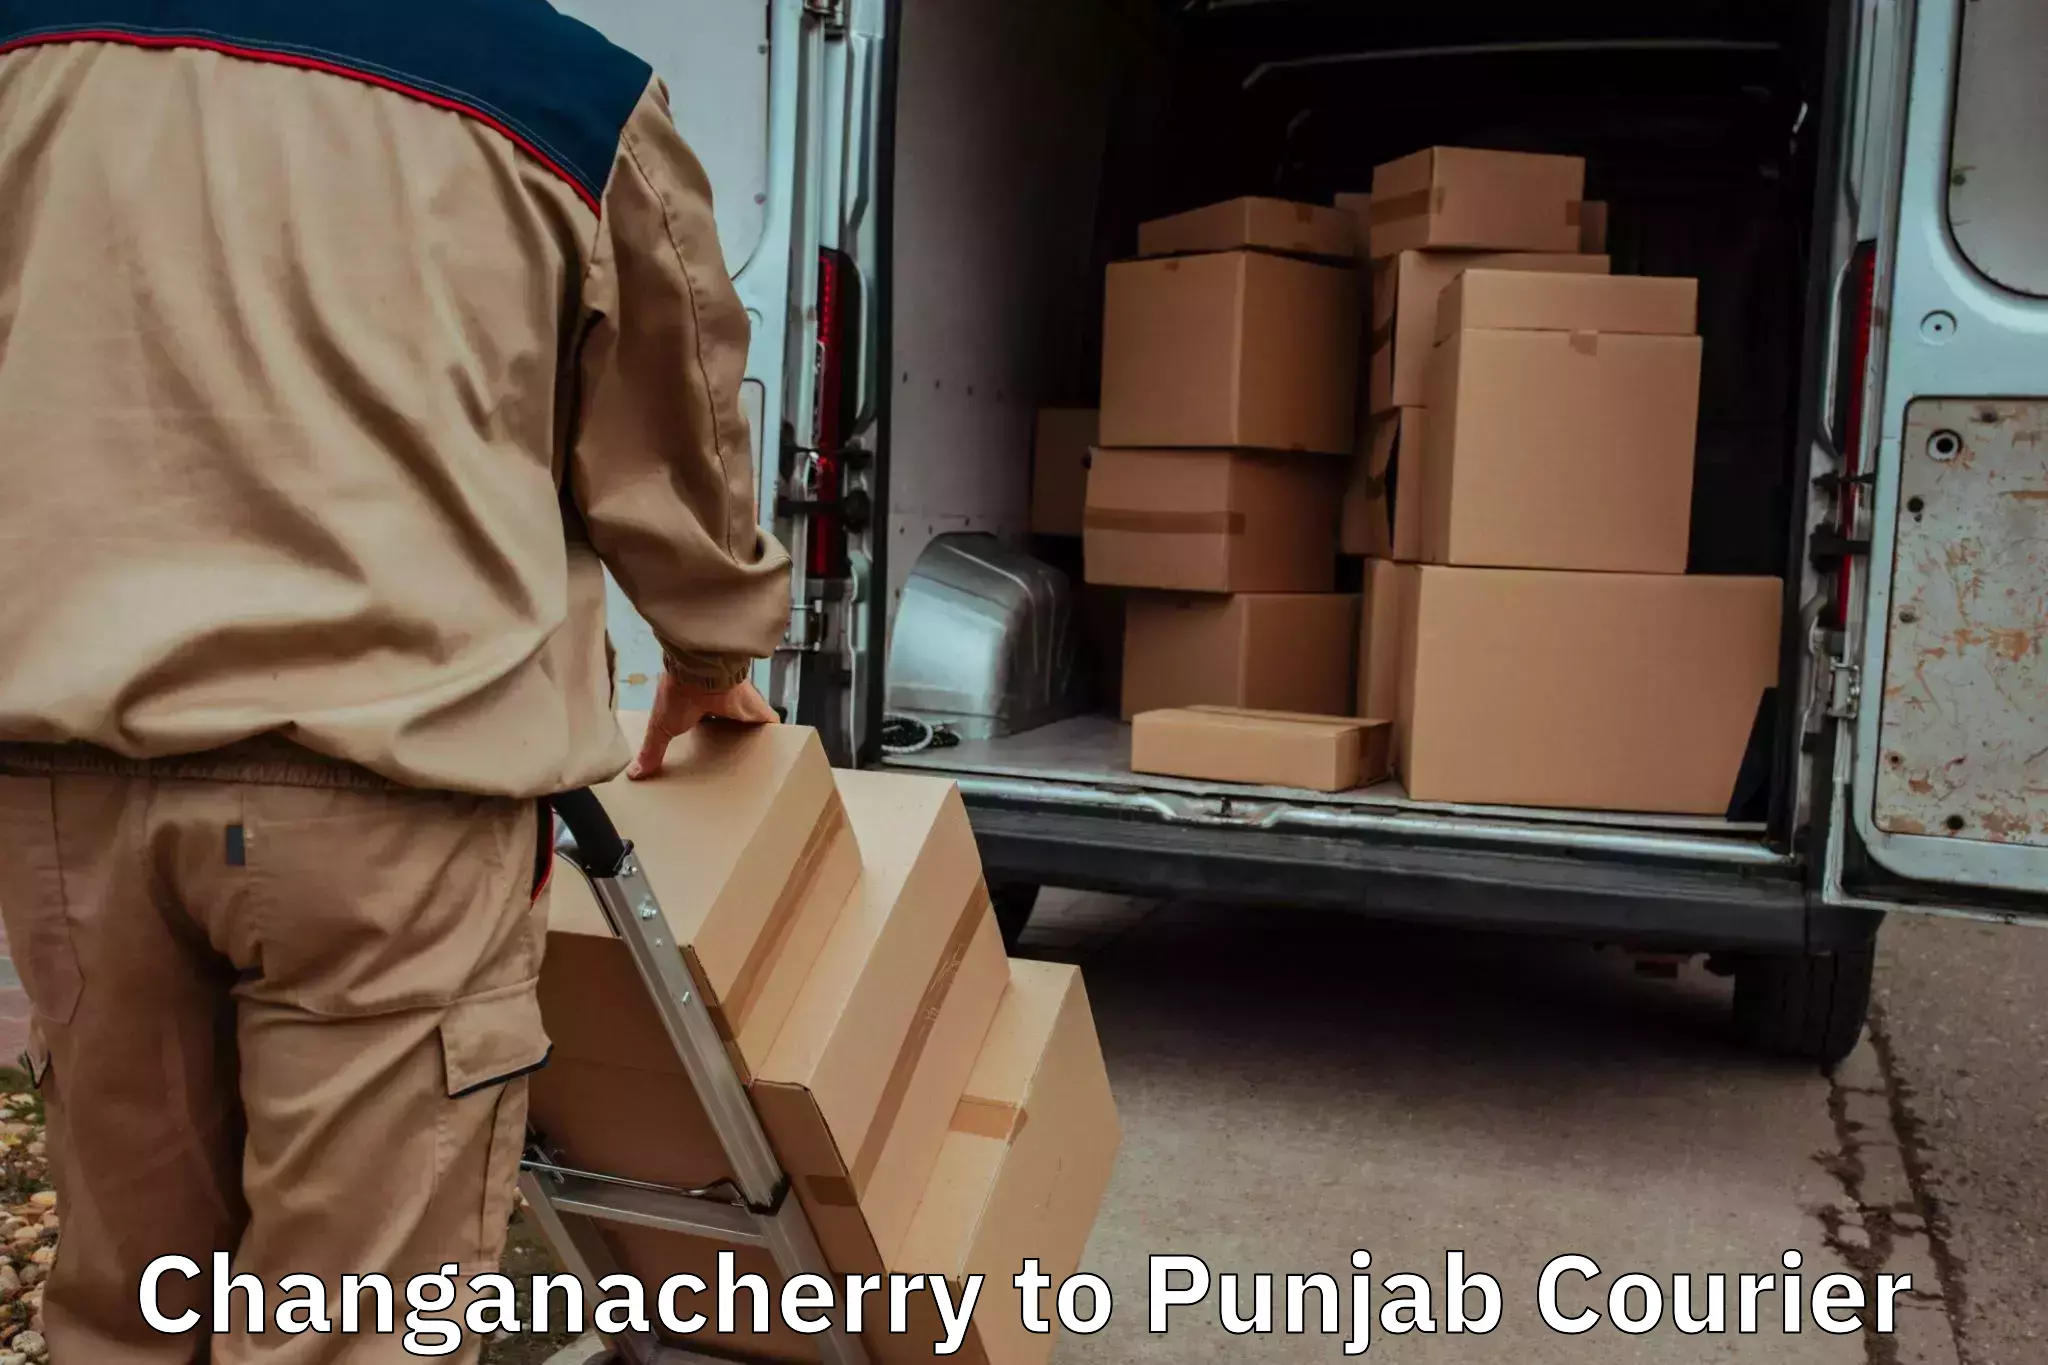 Professional moving company Changanacherry to Dhilwan